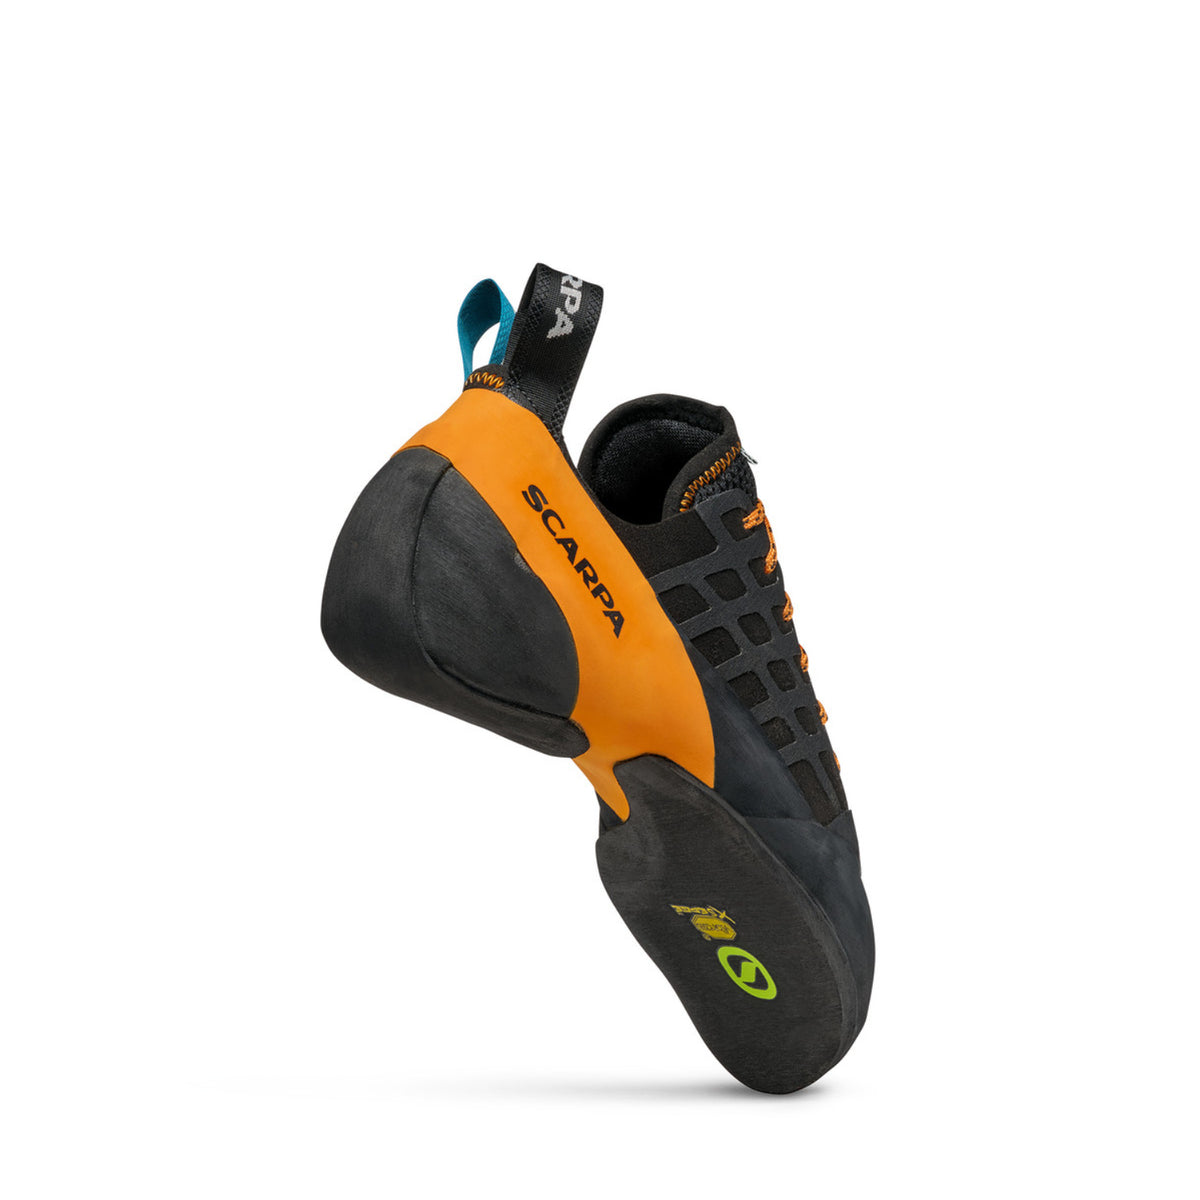 Scarpa Instinct Lace black orange. showing heel and logo